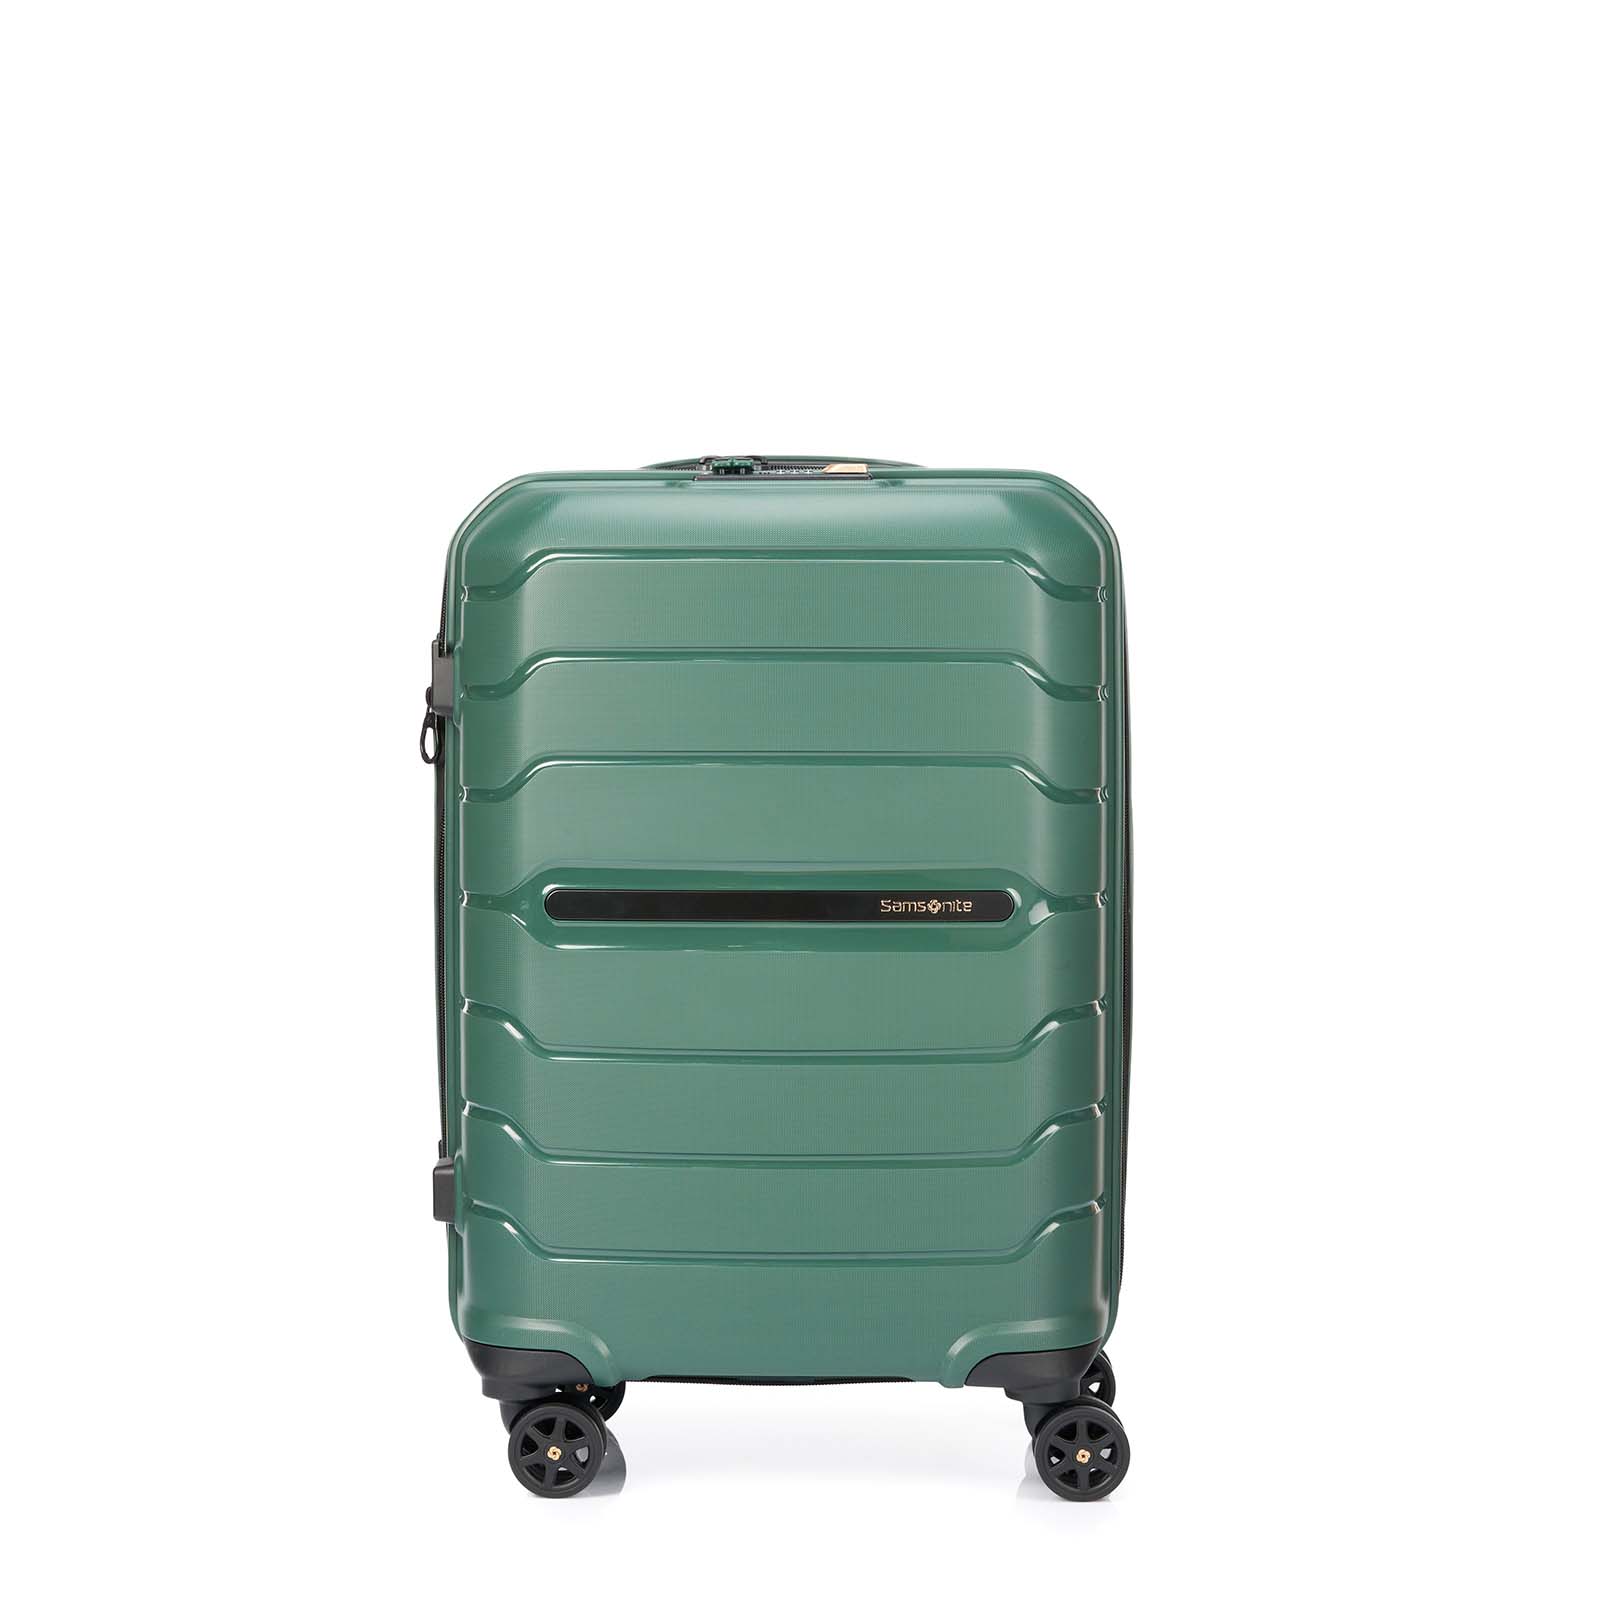 Samsonite-Oc2lite-55cm-Carry-On-Suitcase-Urban-Green-Front